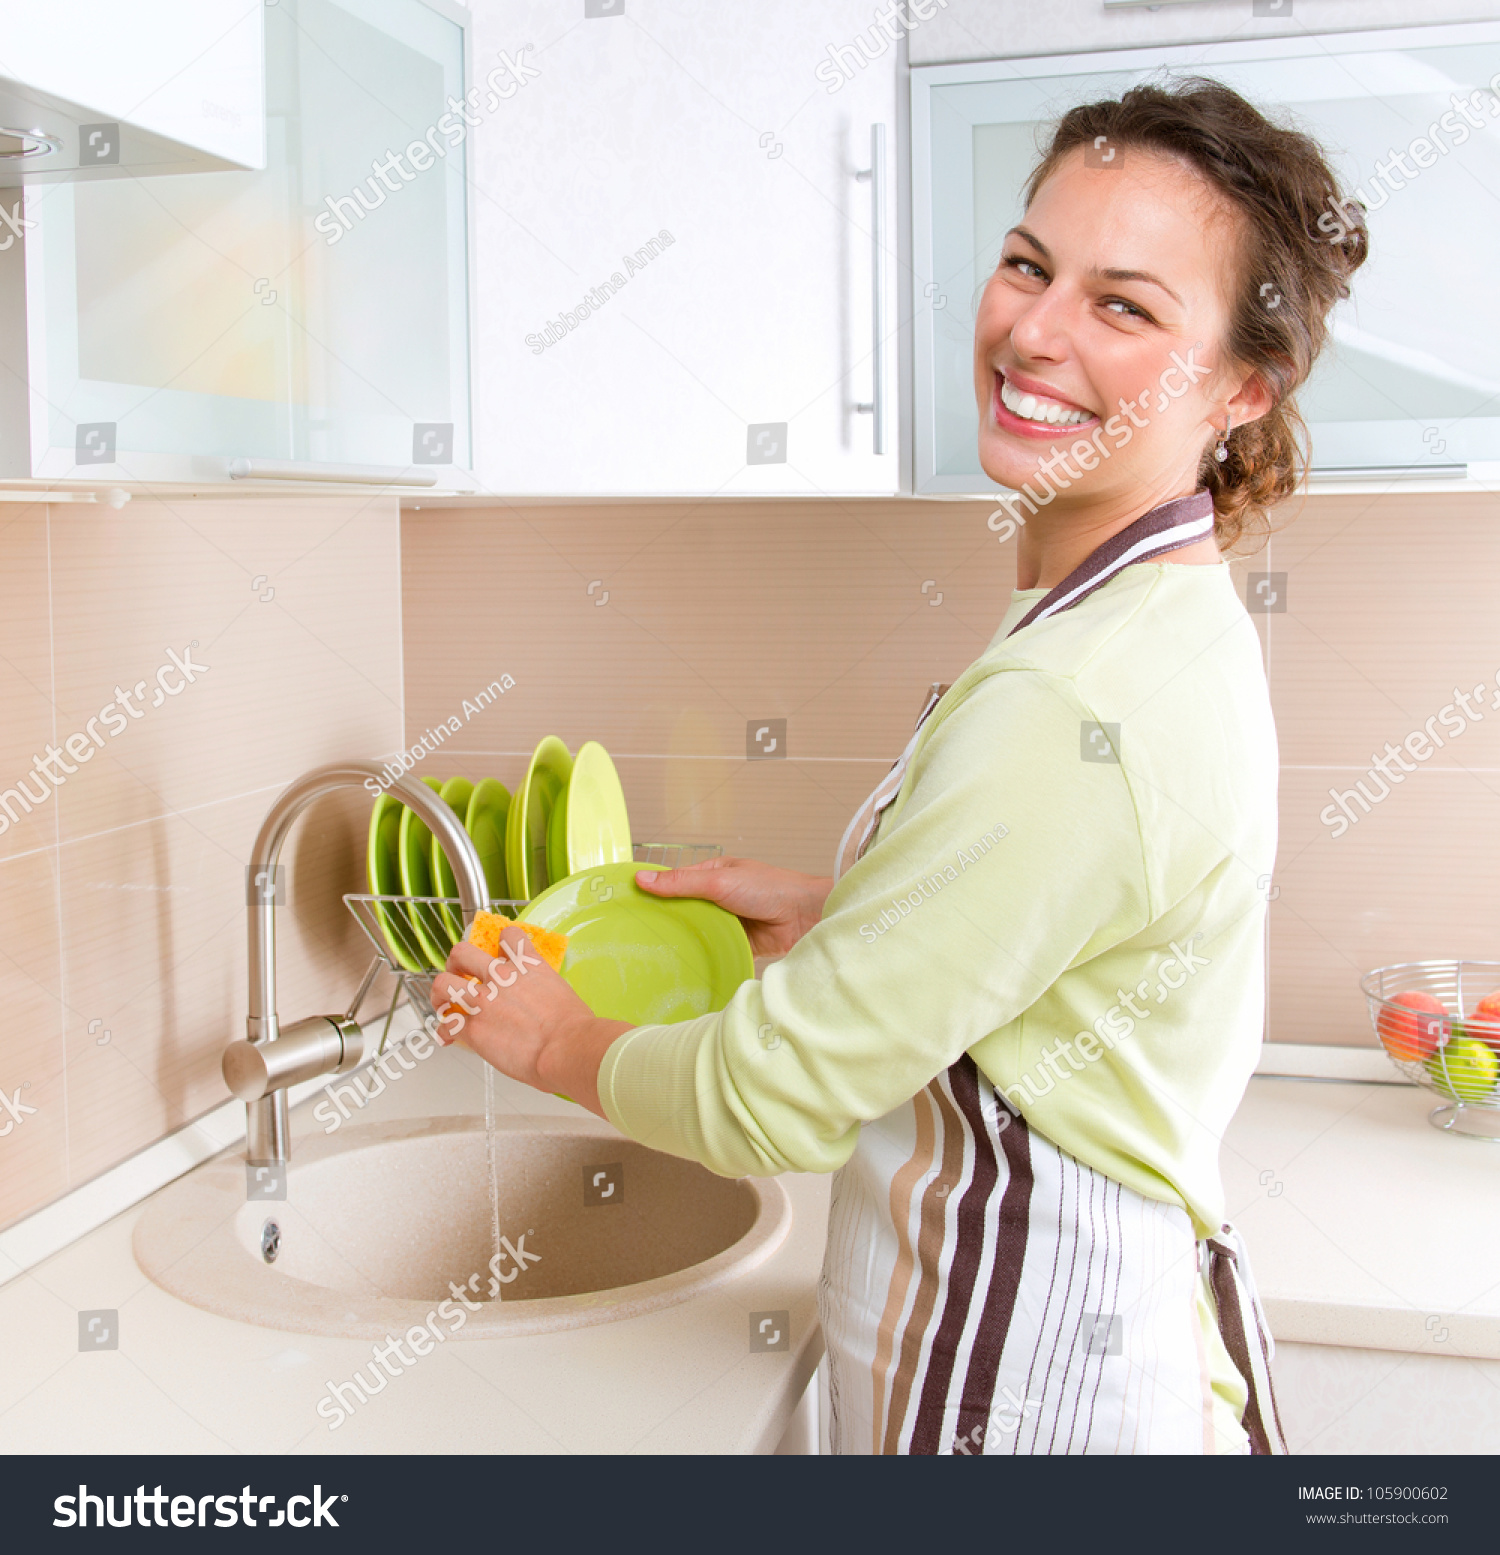 kitchen dish washing